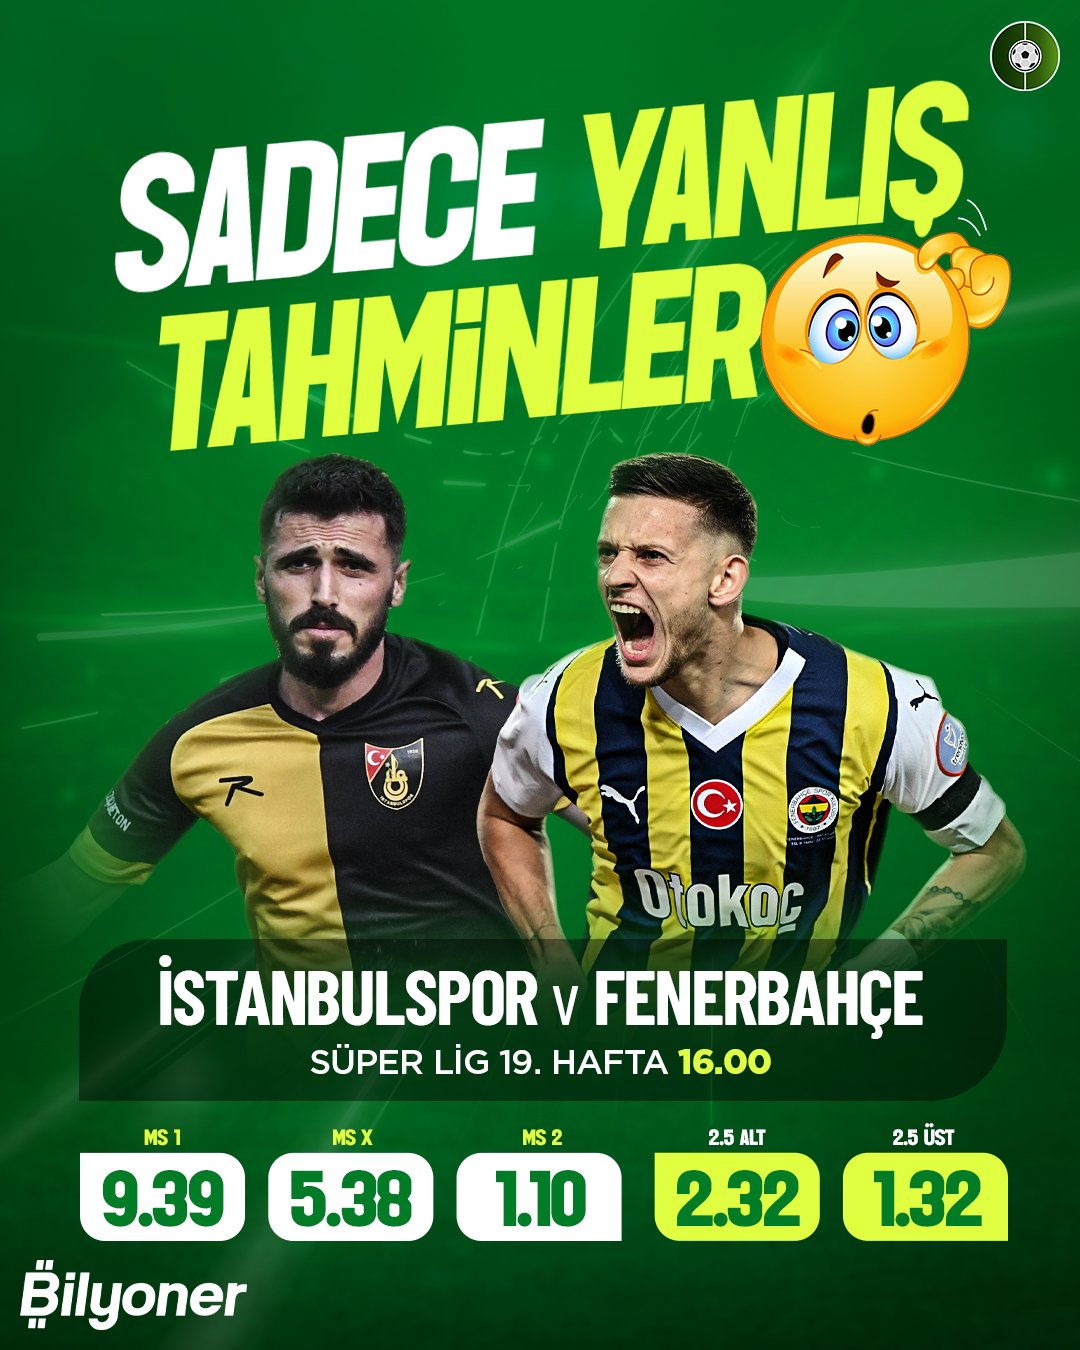 Fenerbahçe vs Galatasaray: The Eternal Rivalry of Turkish Football